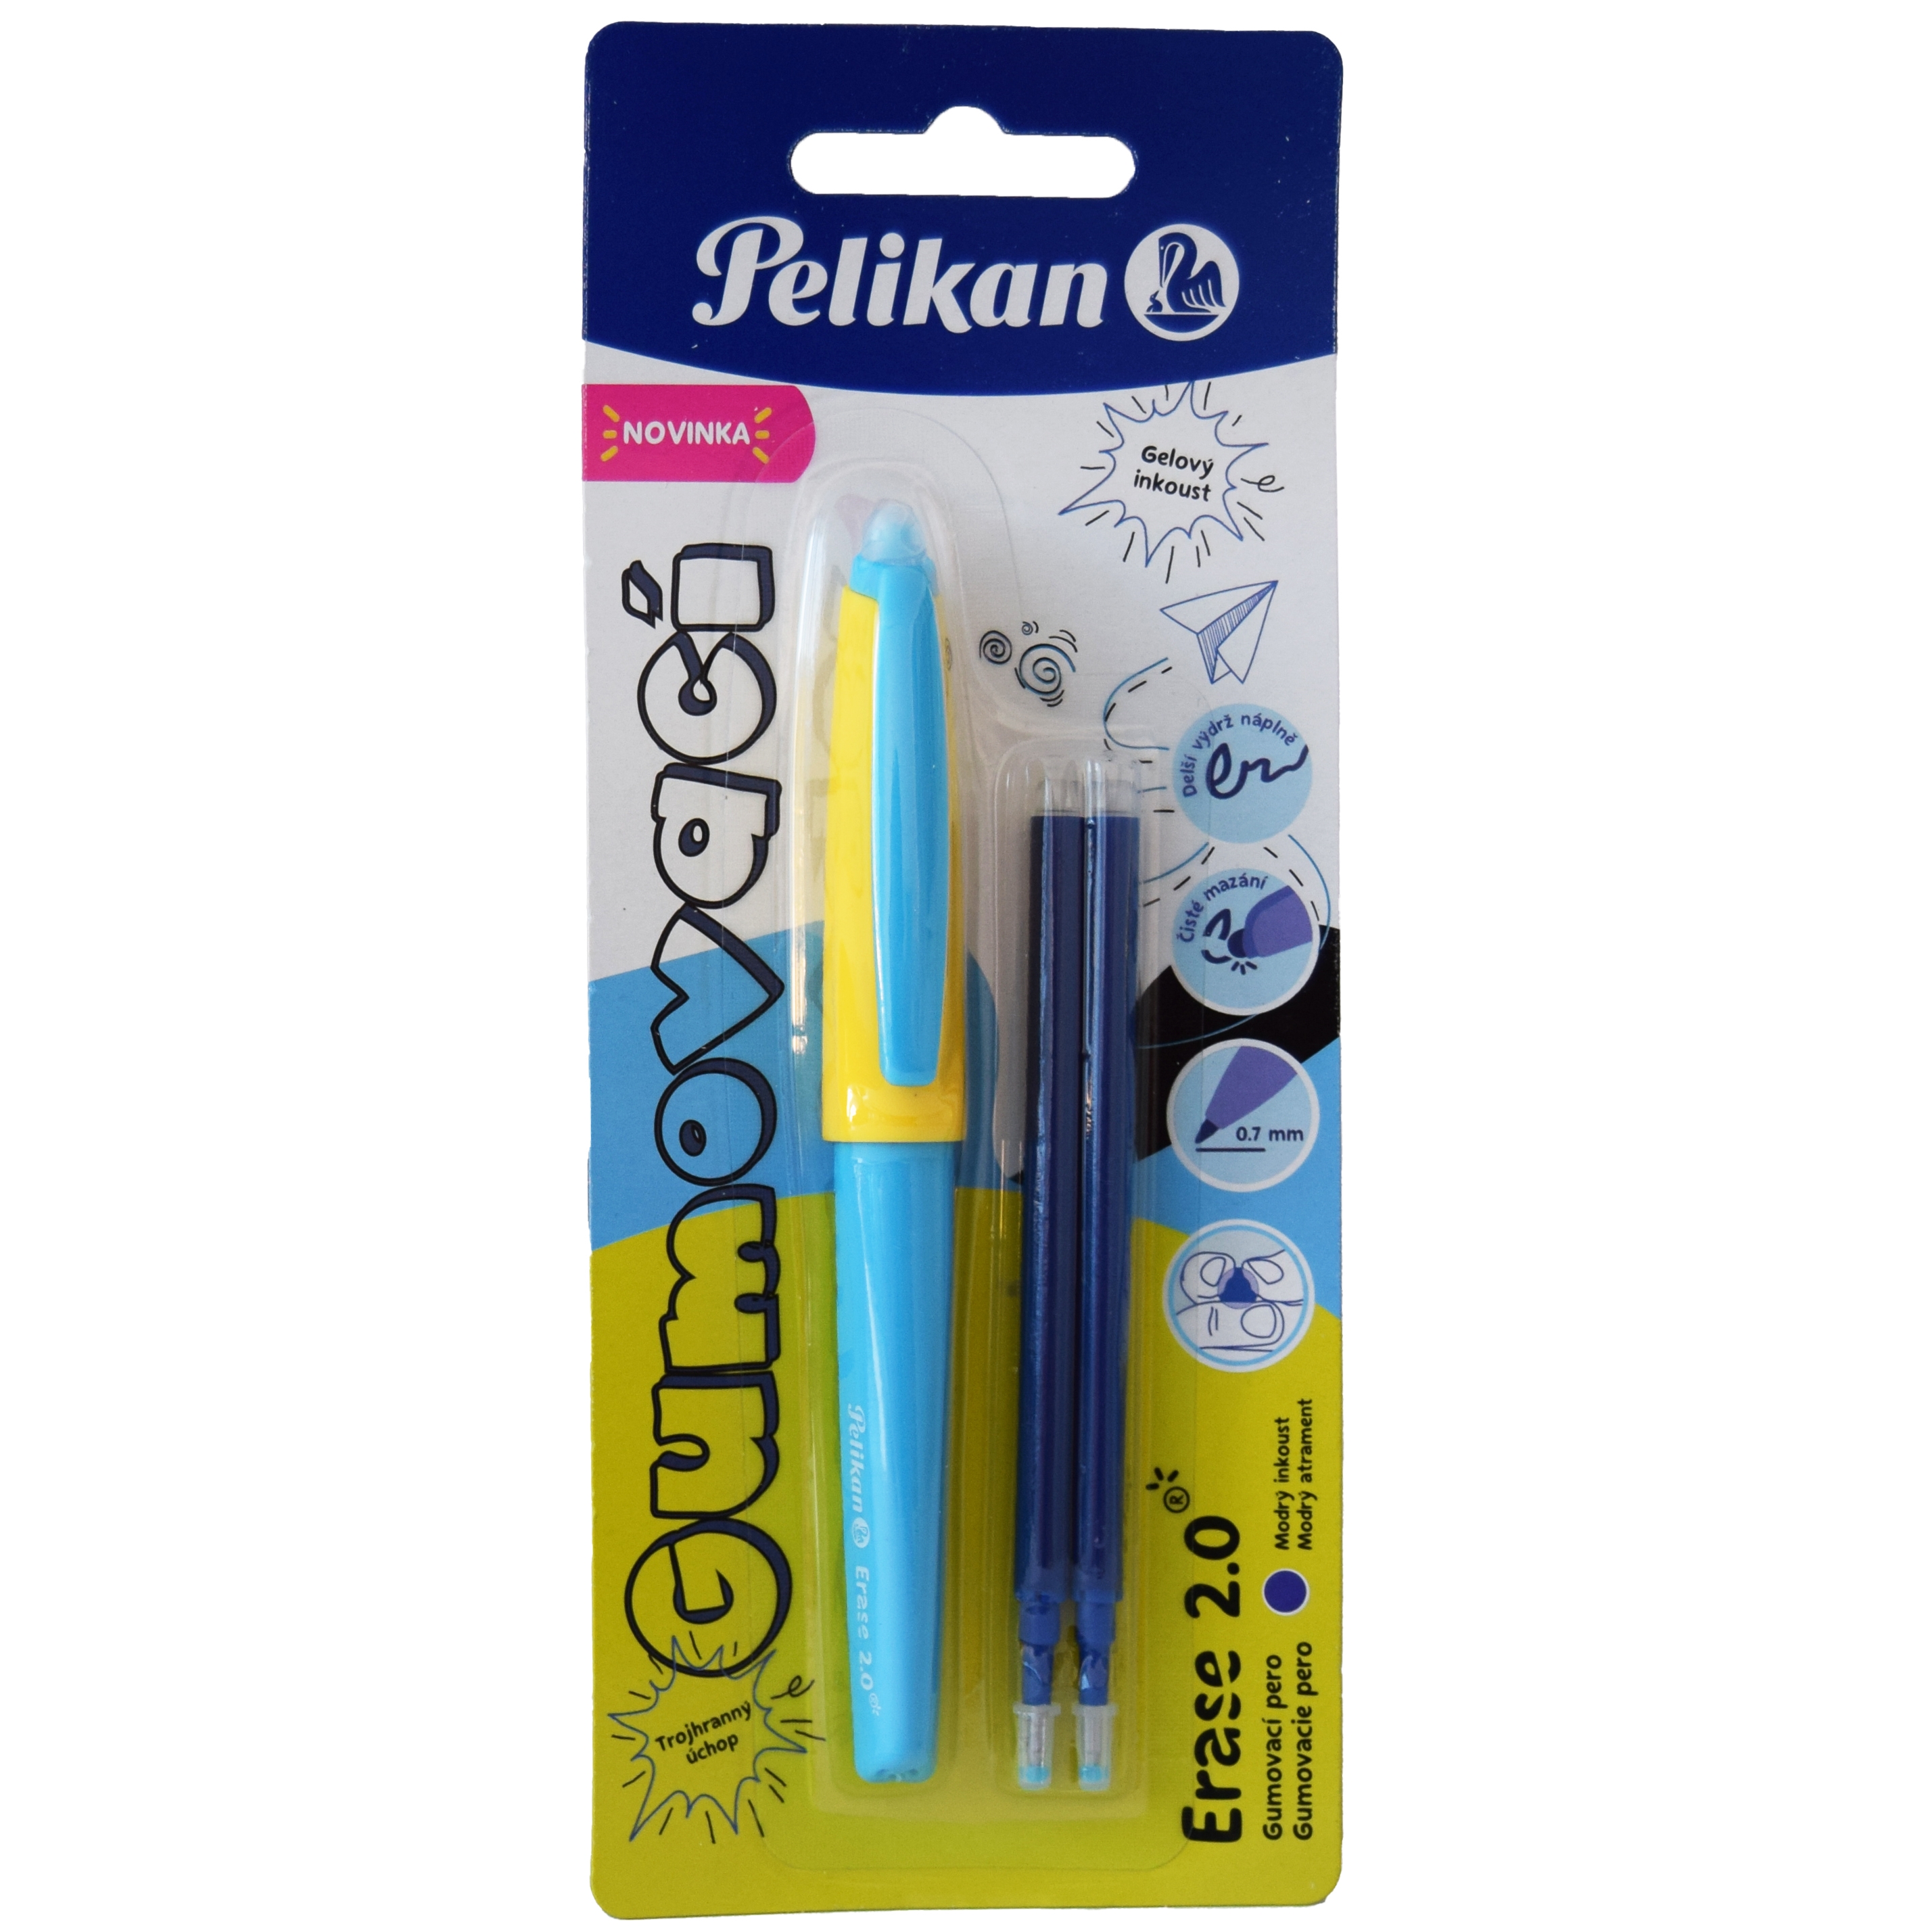 Gumovací pero Pelikan, žluto modré,1 ks+2 náplně